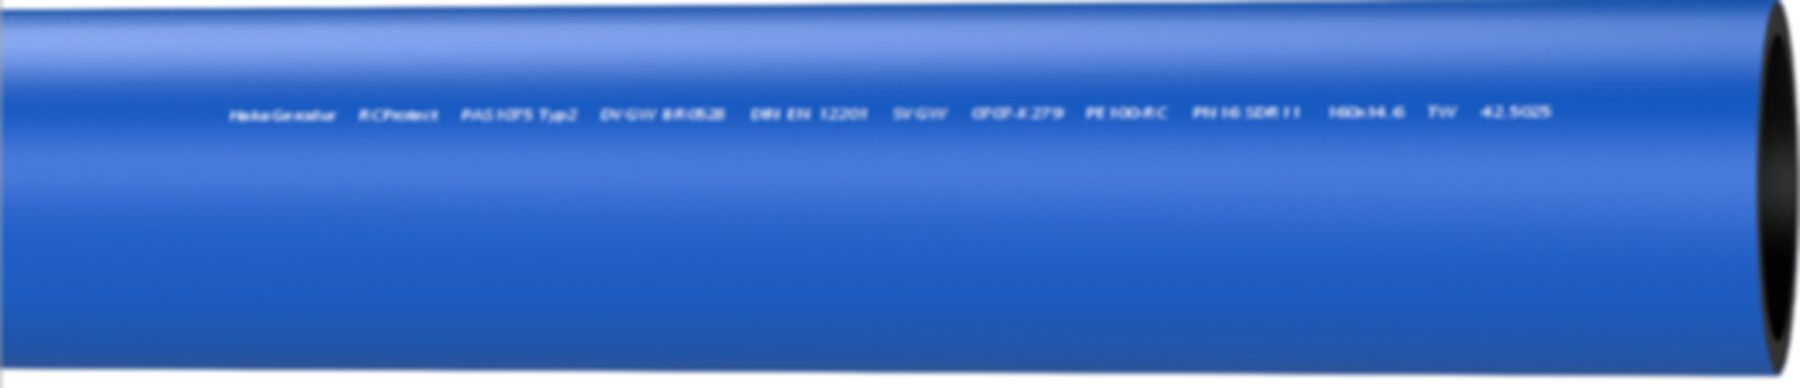 Druckrohr Wasser PE 100RC, SDR 17, PN 10 d 160 x 9.5mm - RCprotect in Stangen